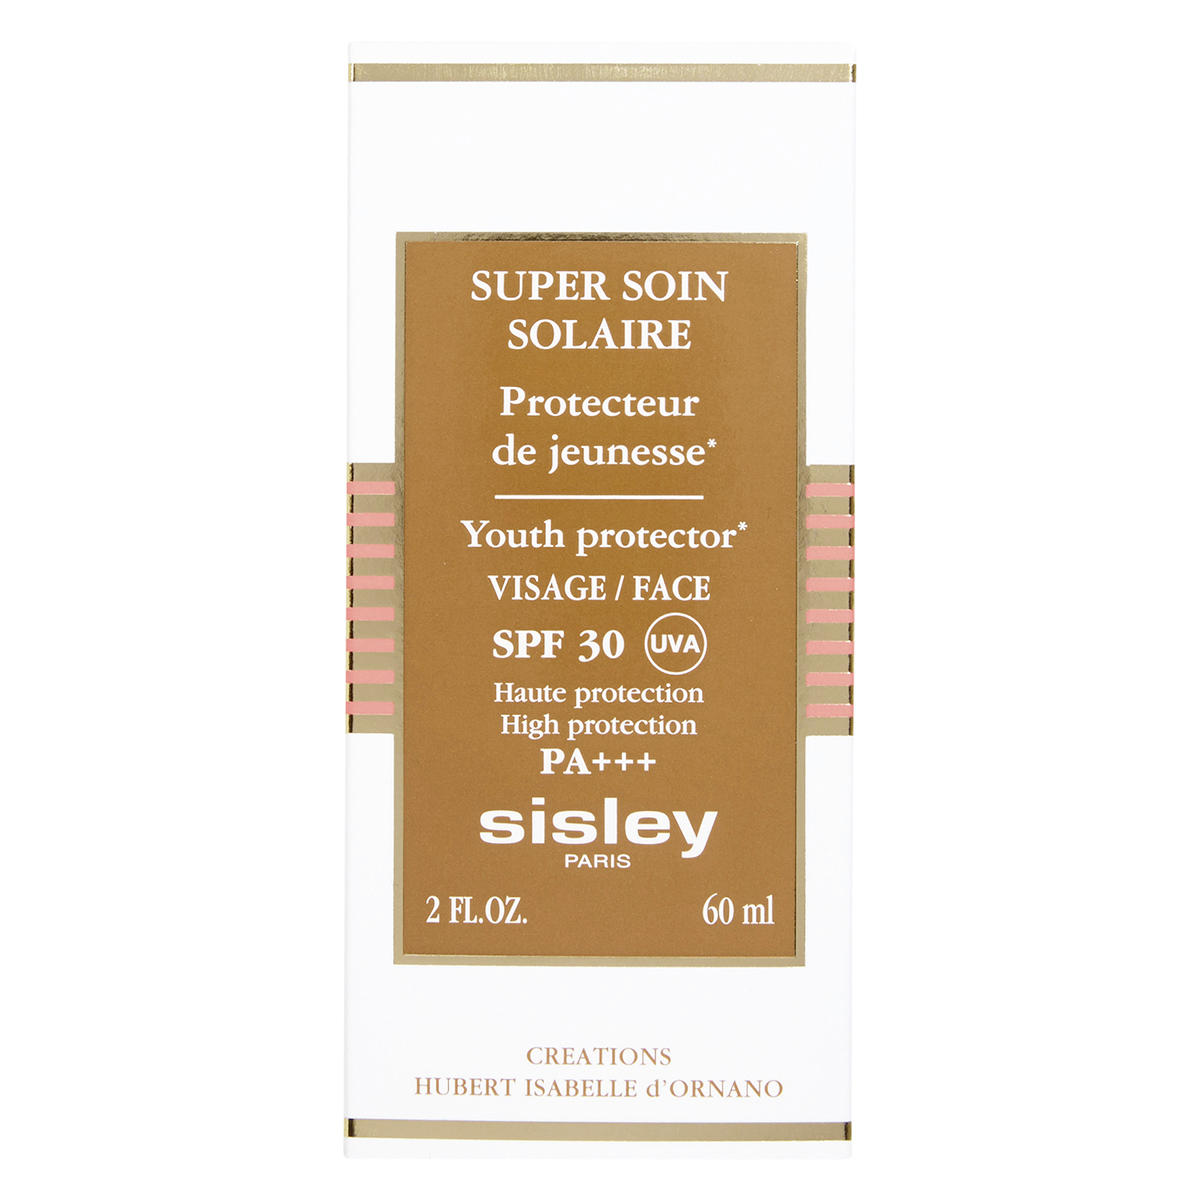 Sisley Paris Sunleÿa G.E. Super Soin Solaire 60 ml - 4